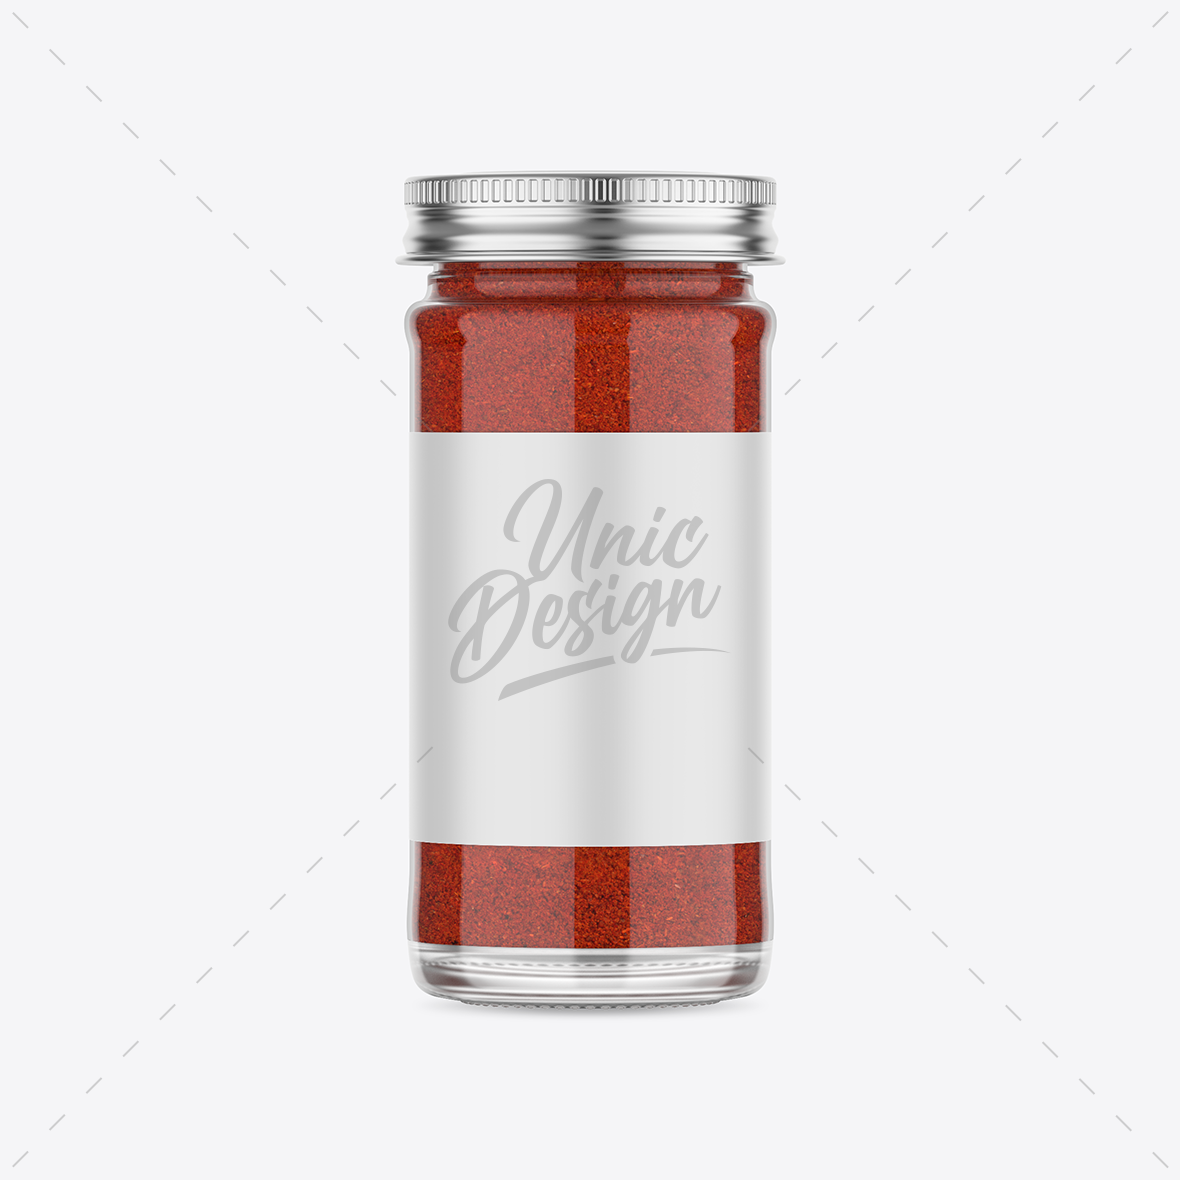 Red Pepper Jar Mockup